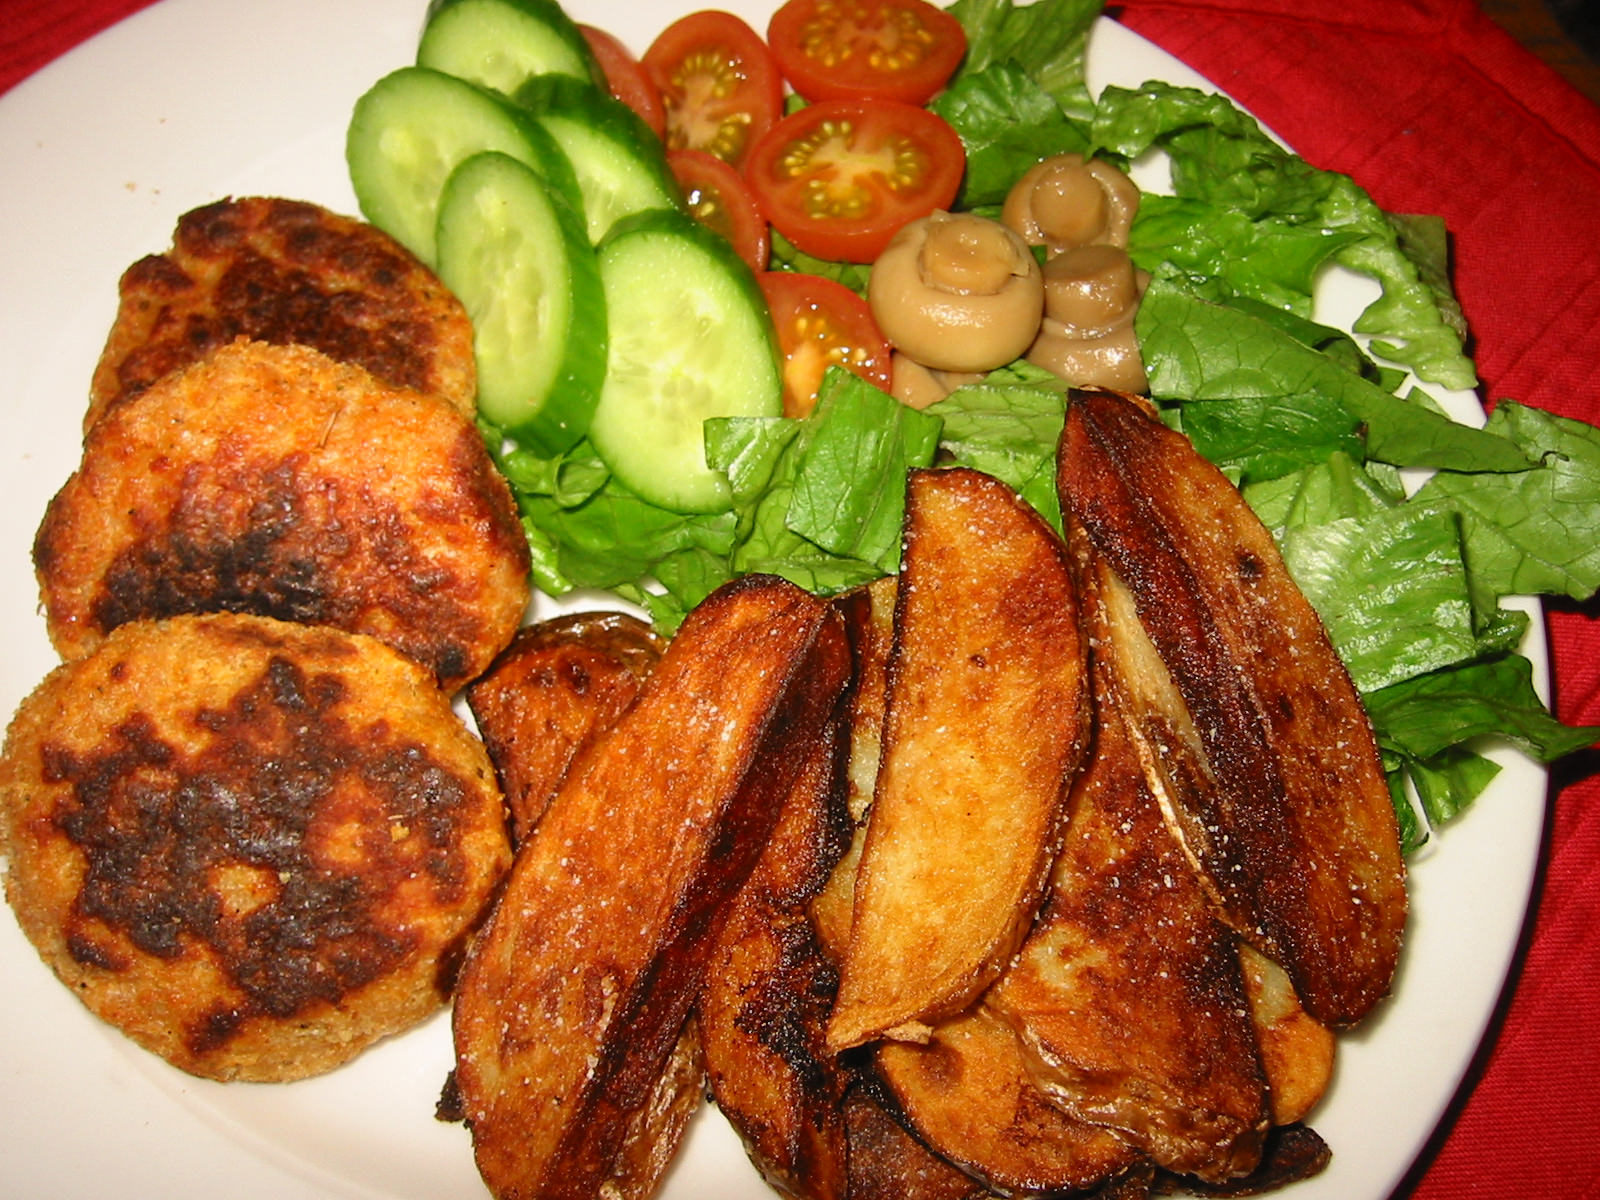 Chicken patties, well-done potato wedges